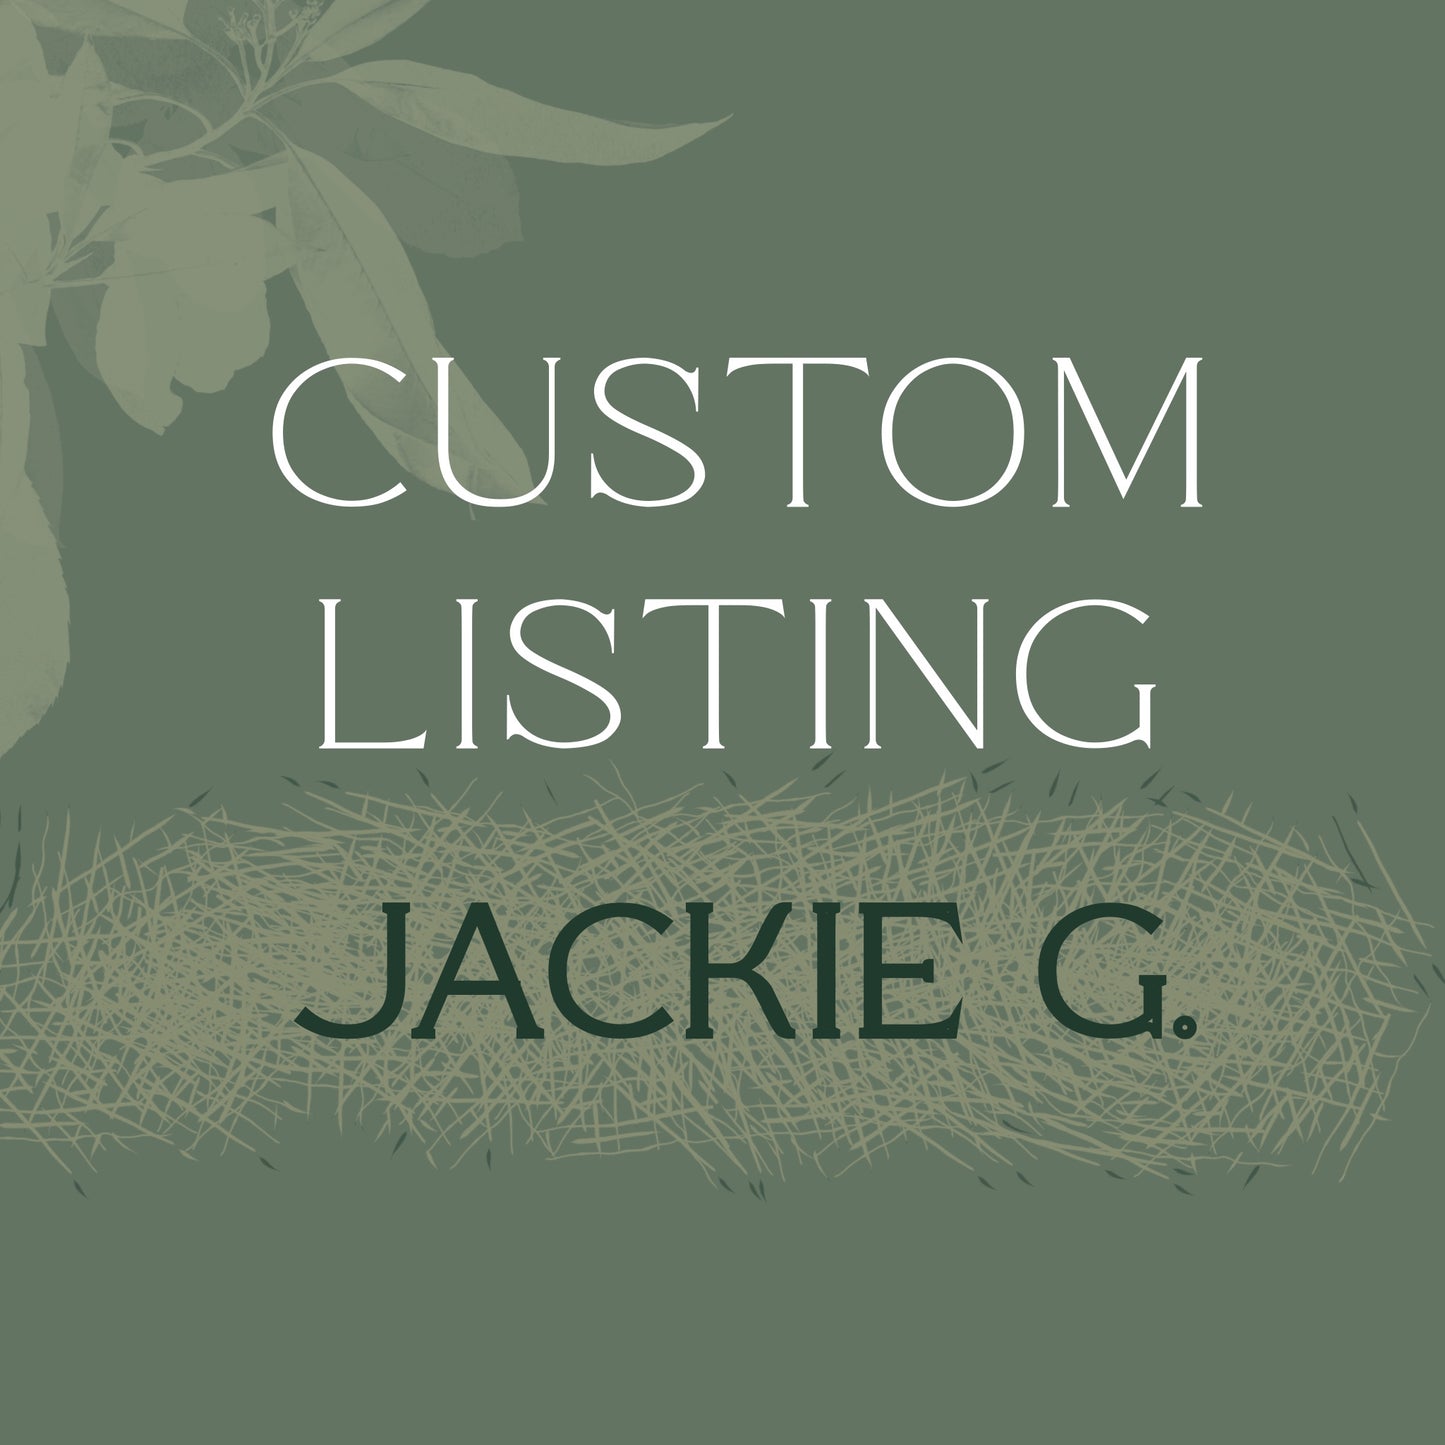 Custom Listing - Jackie G. - Website and Logo Design